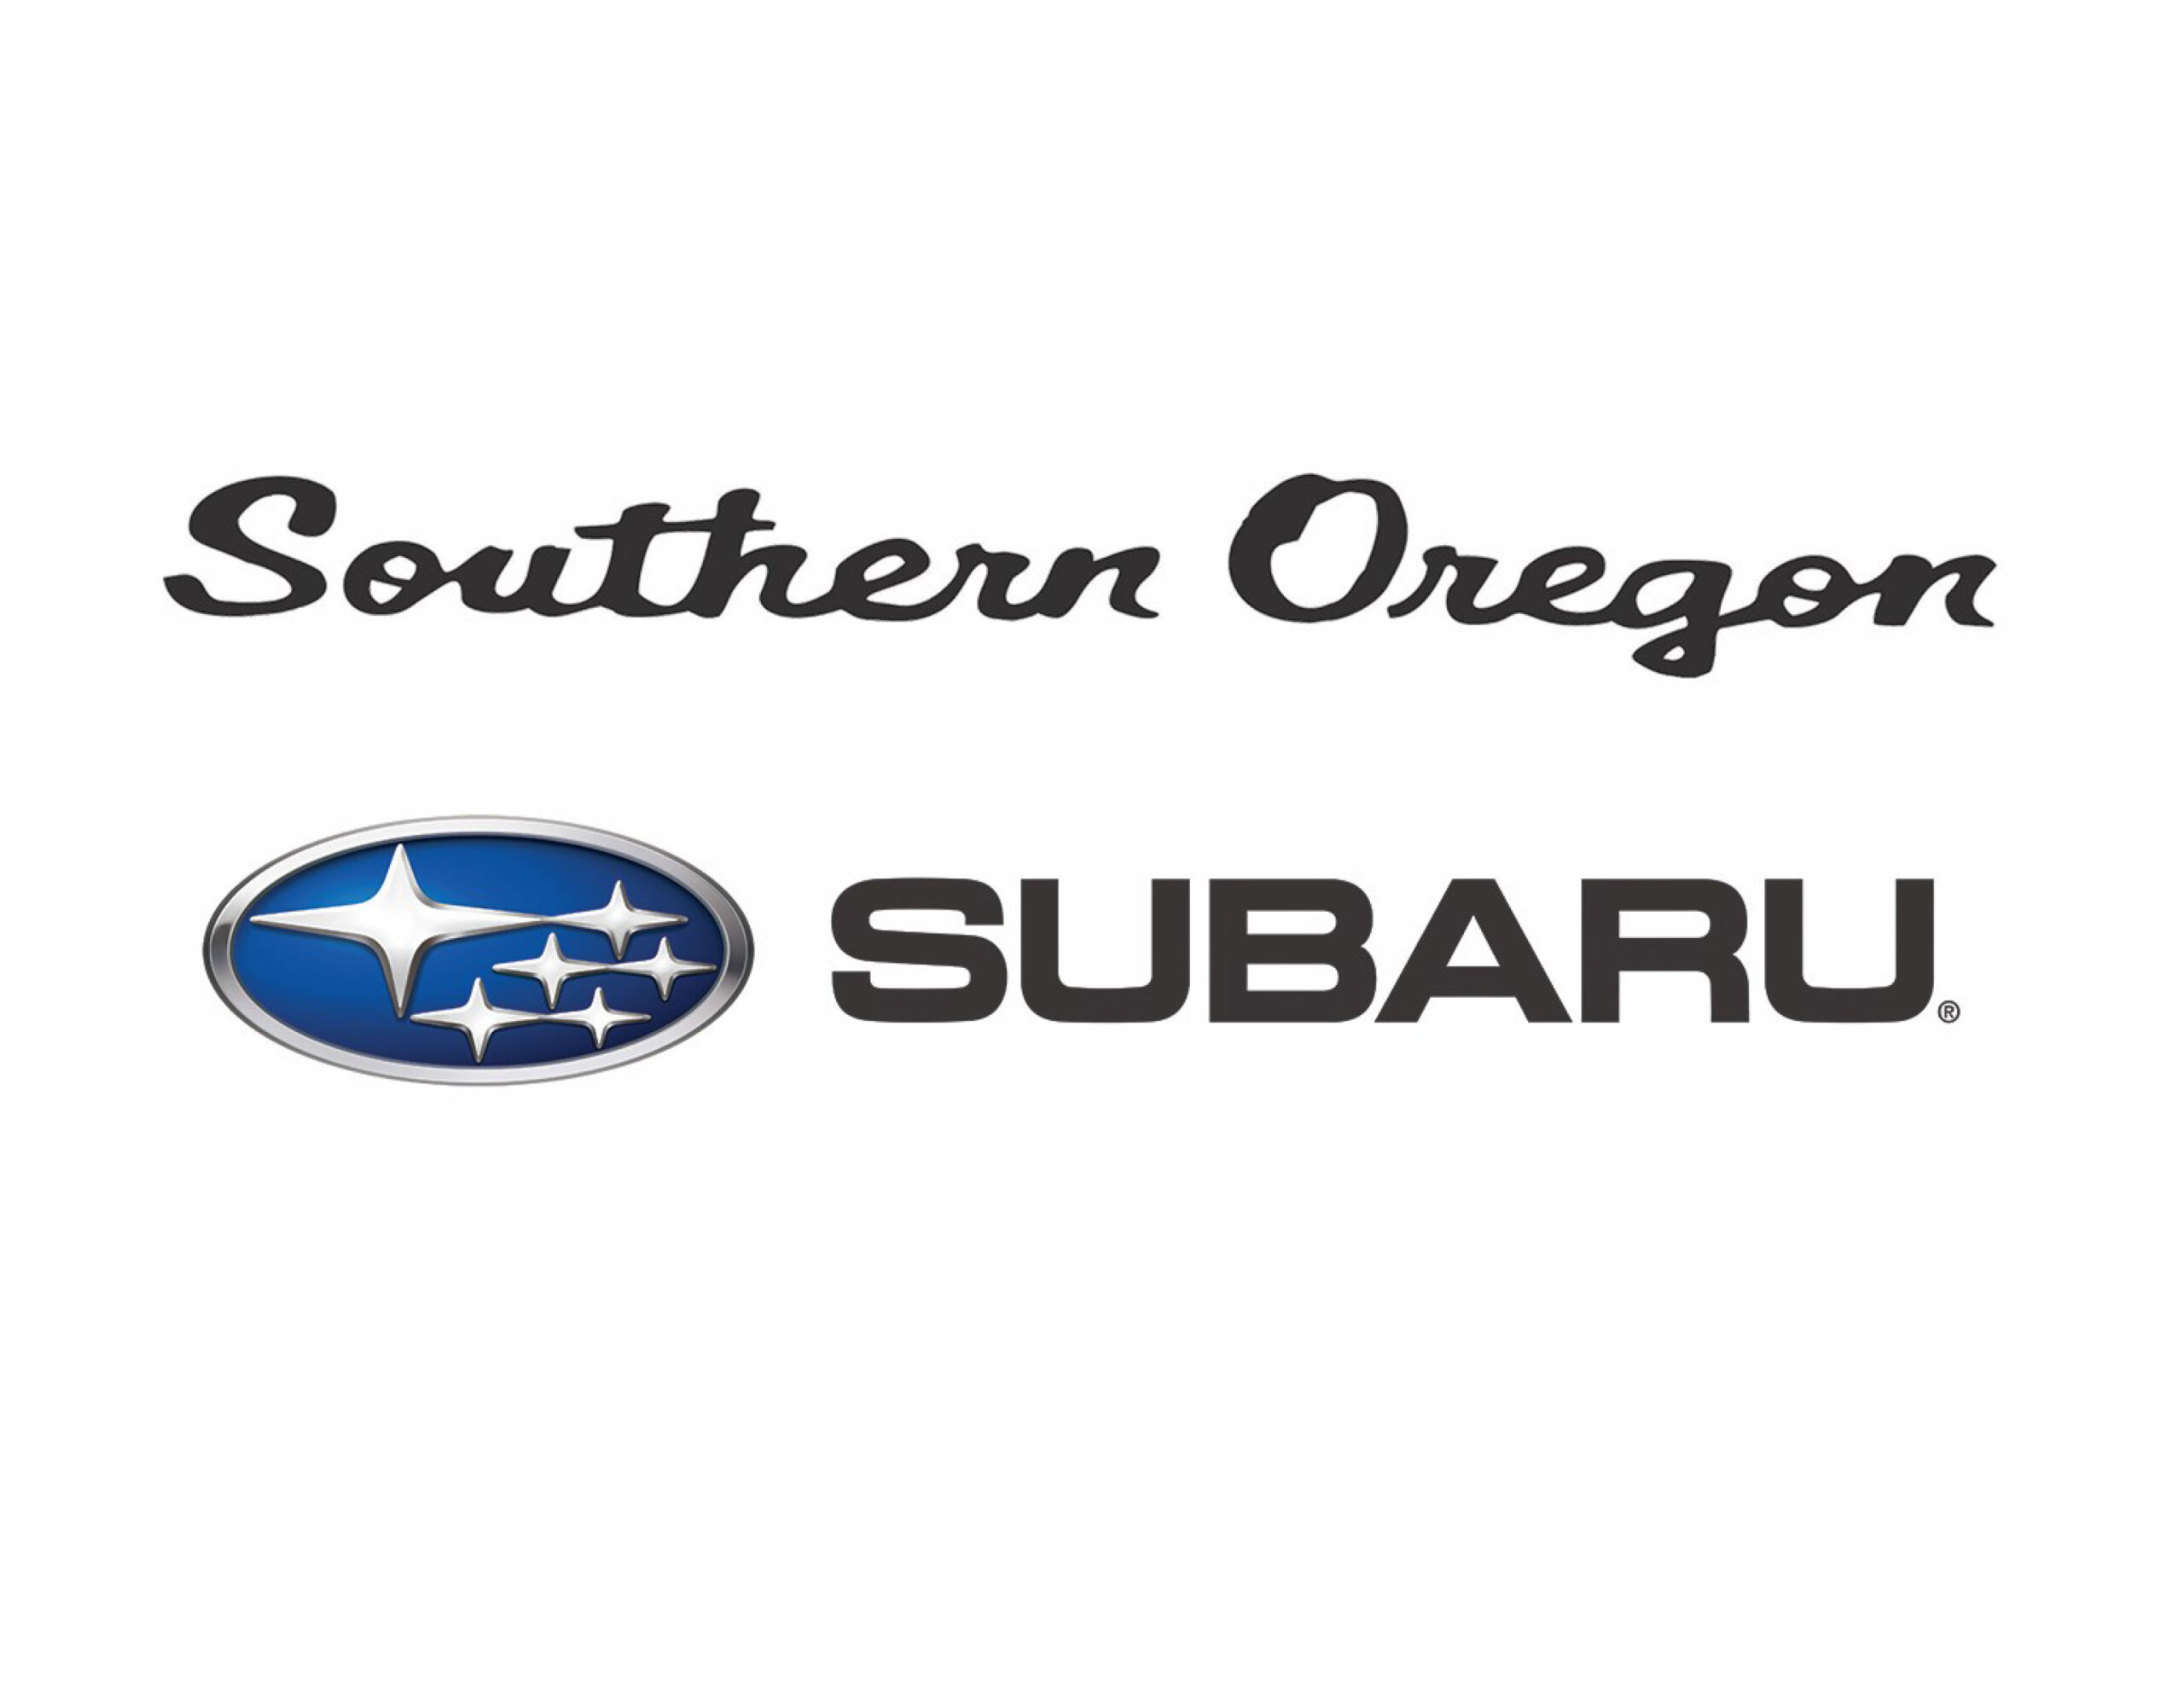 Southern Oregon Subaru